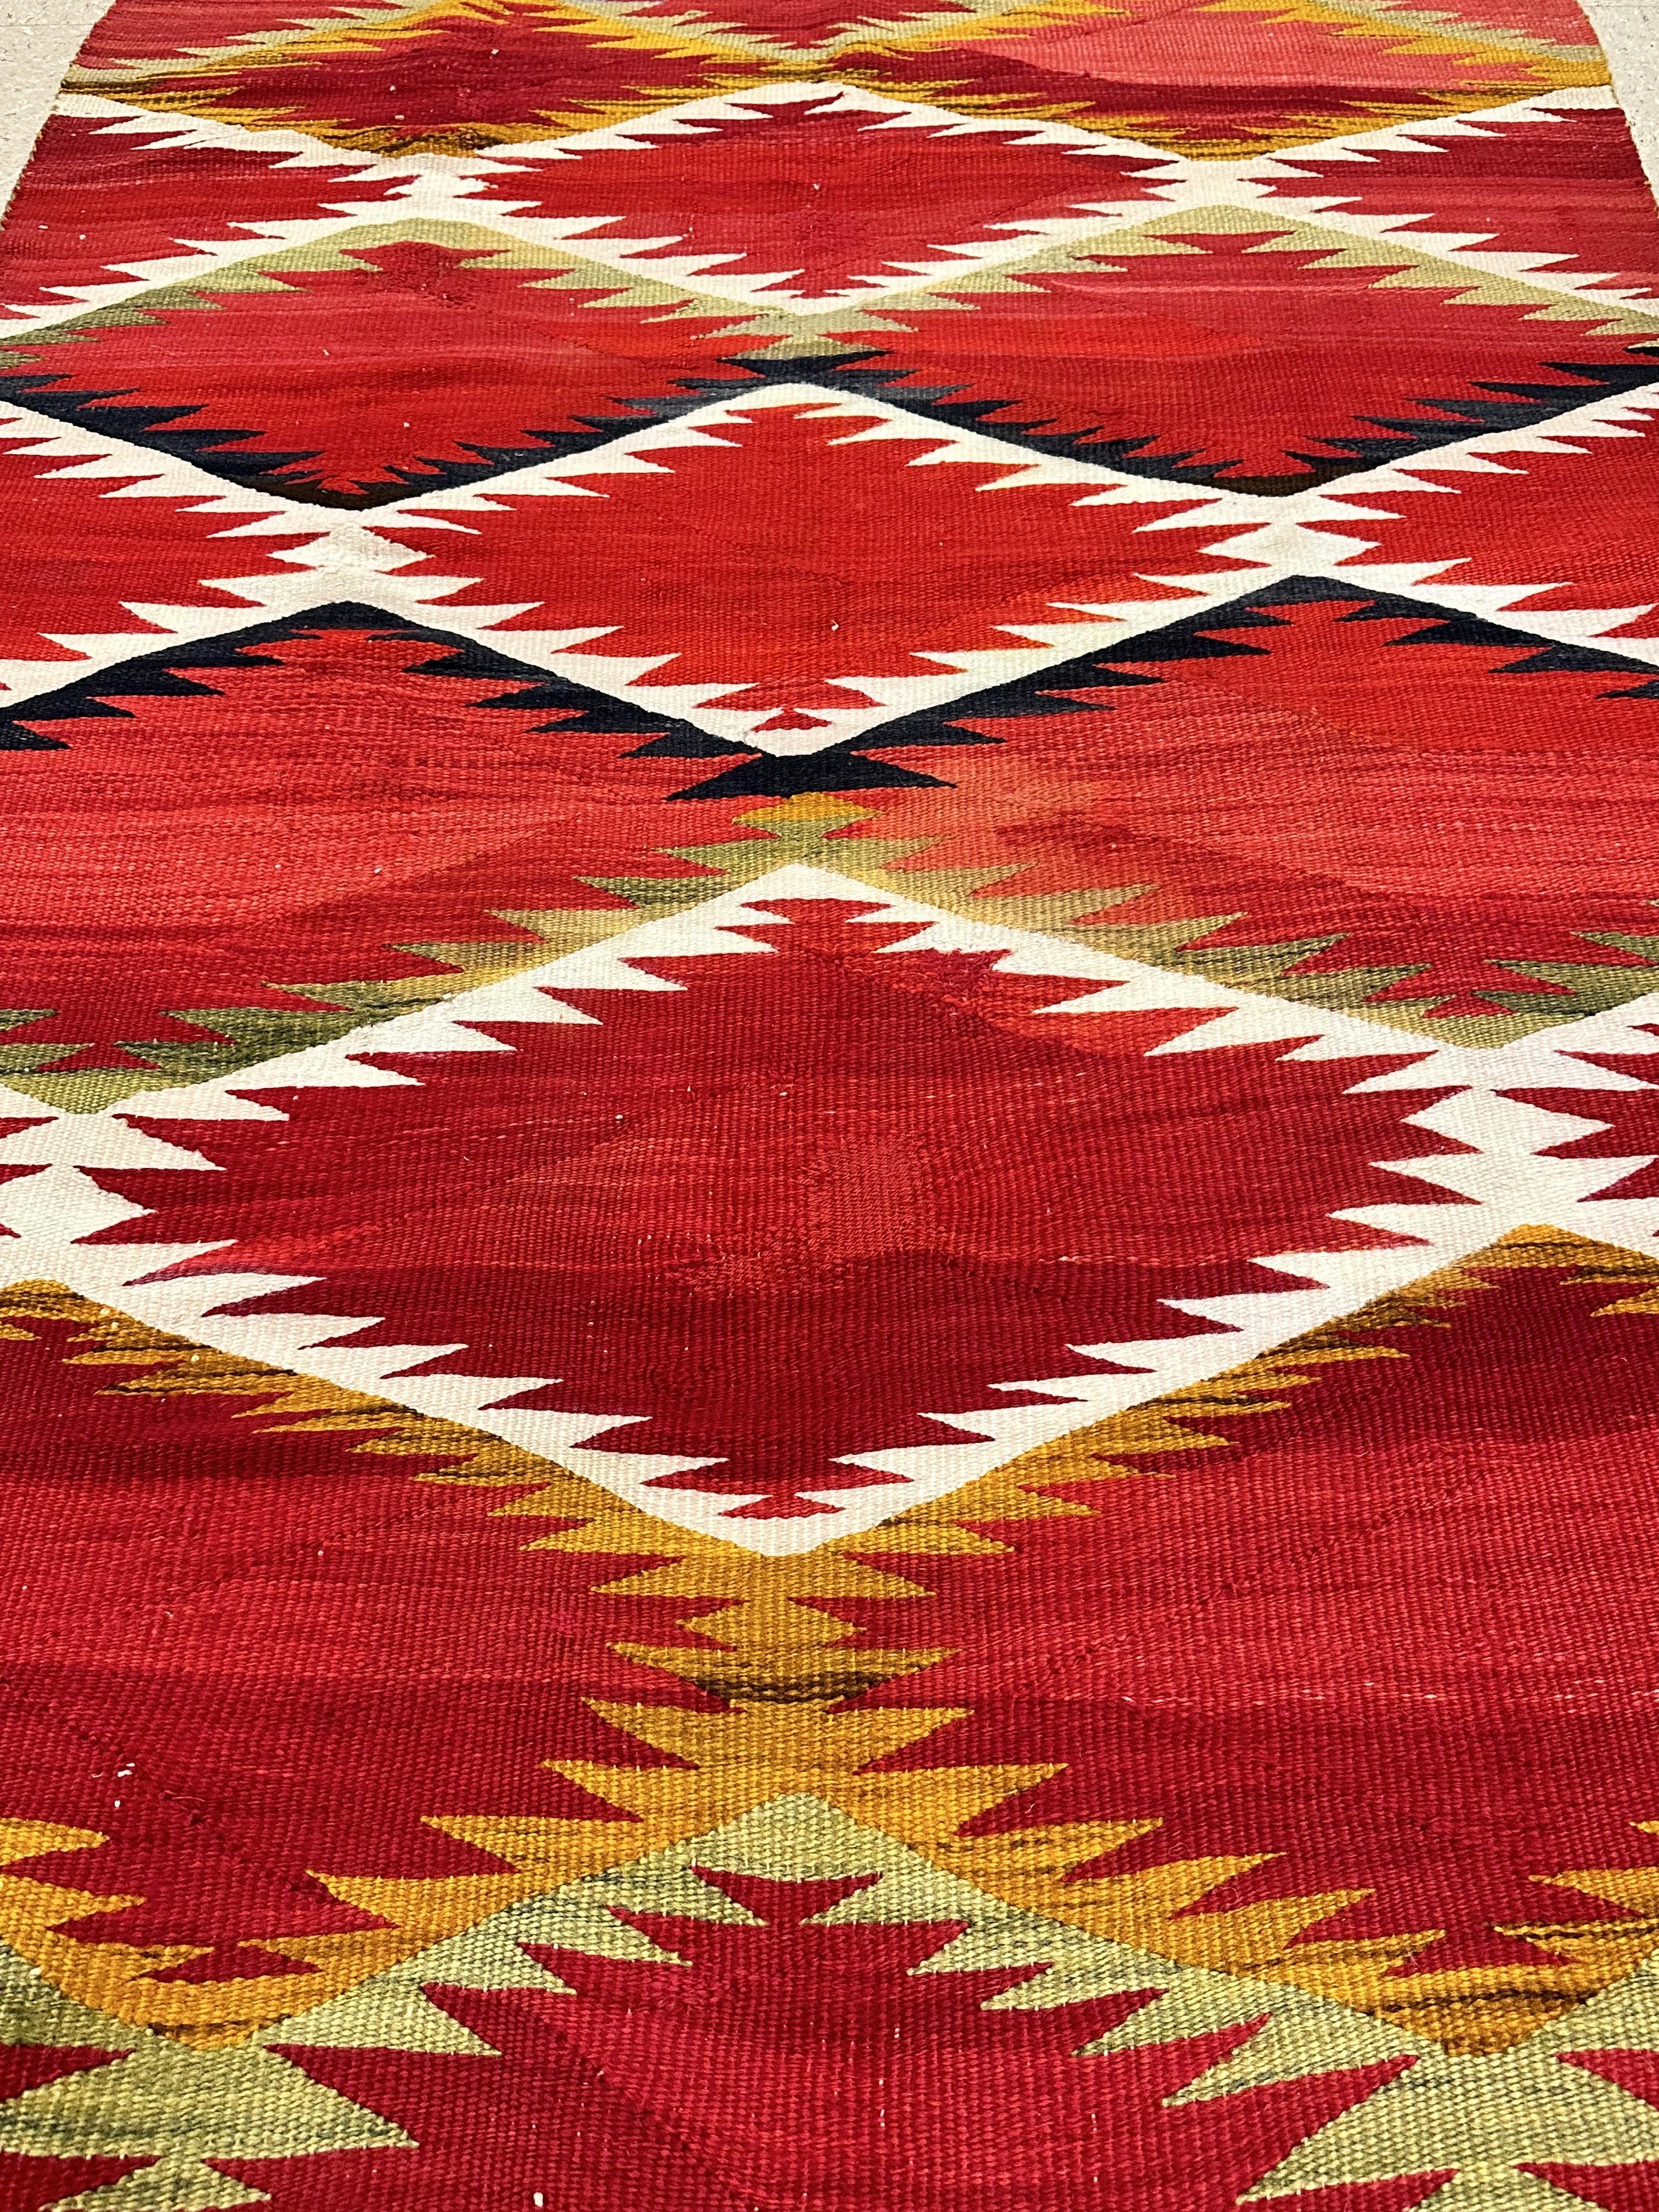 American Antique Navajo Carpet, Folk Rug, Handmade Wool, Red, Black, White, Green For Sale